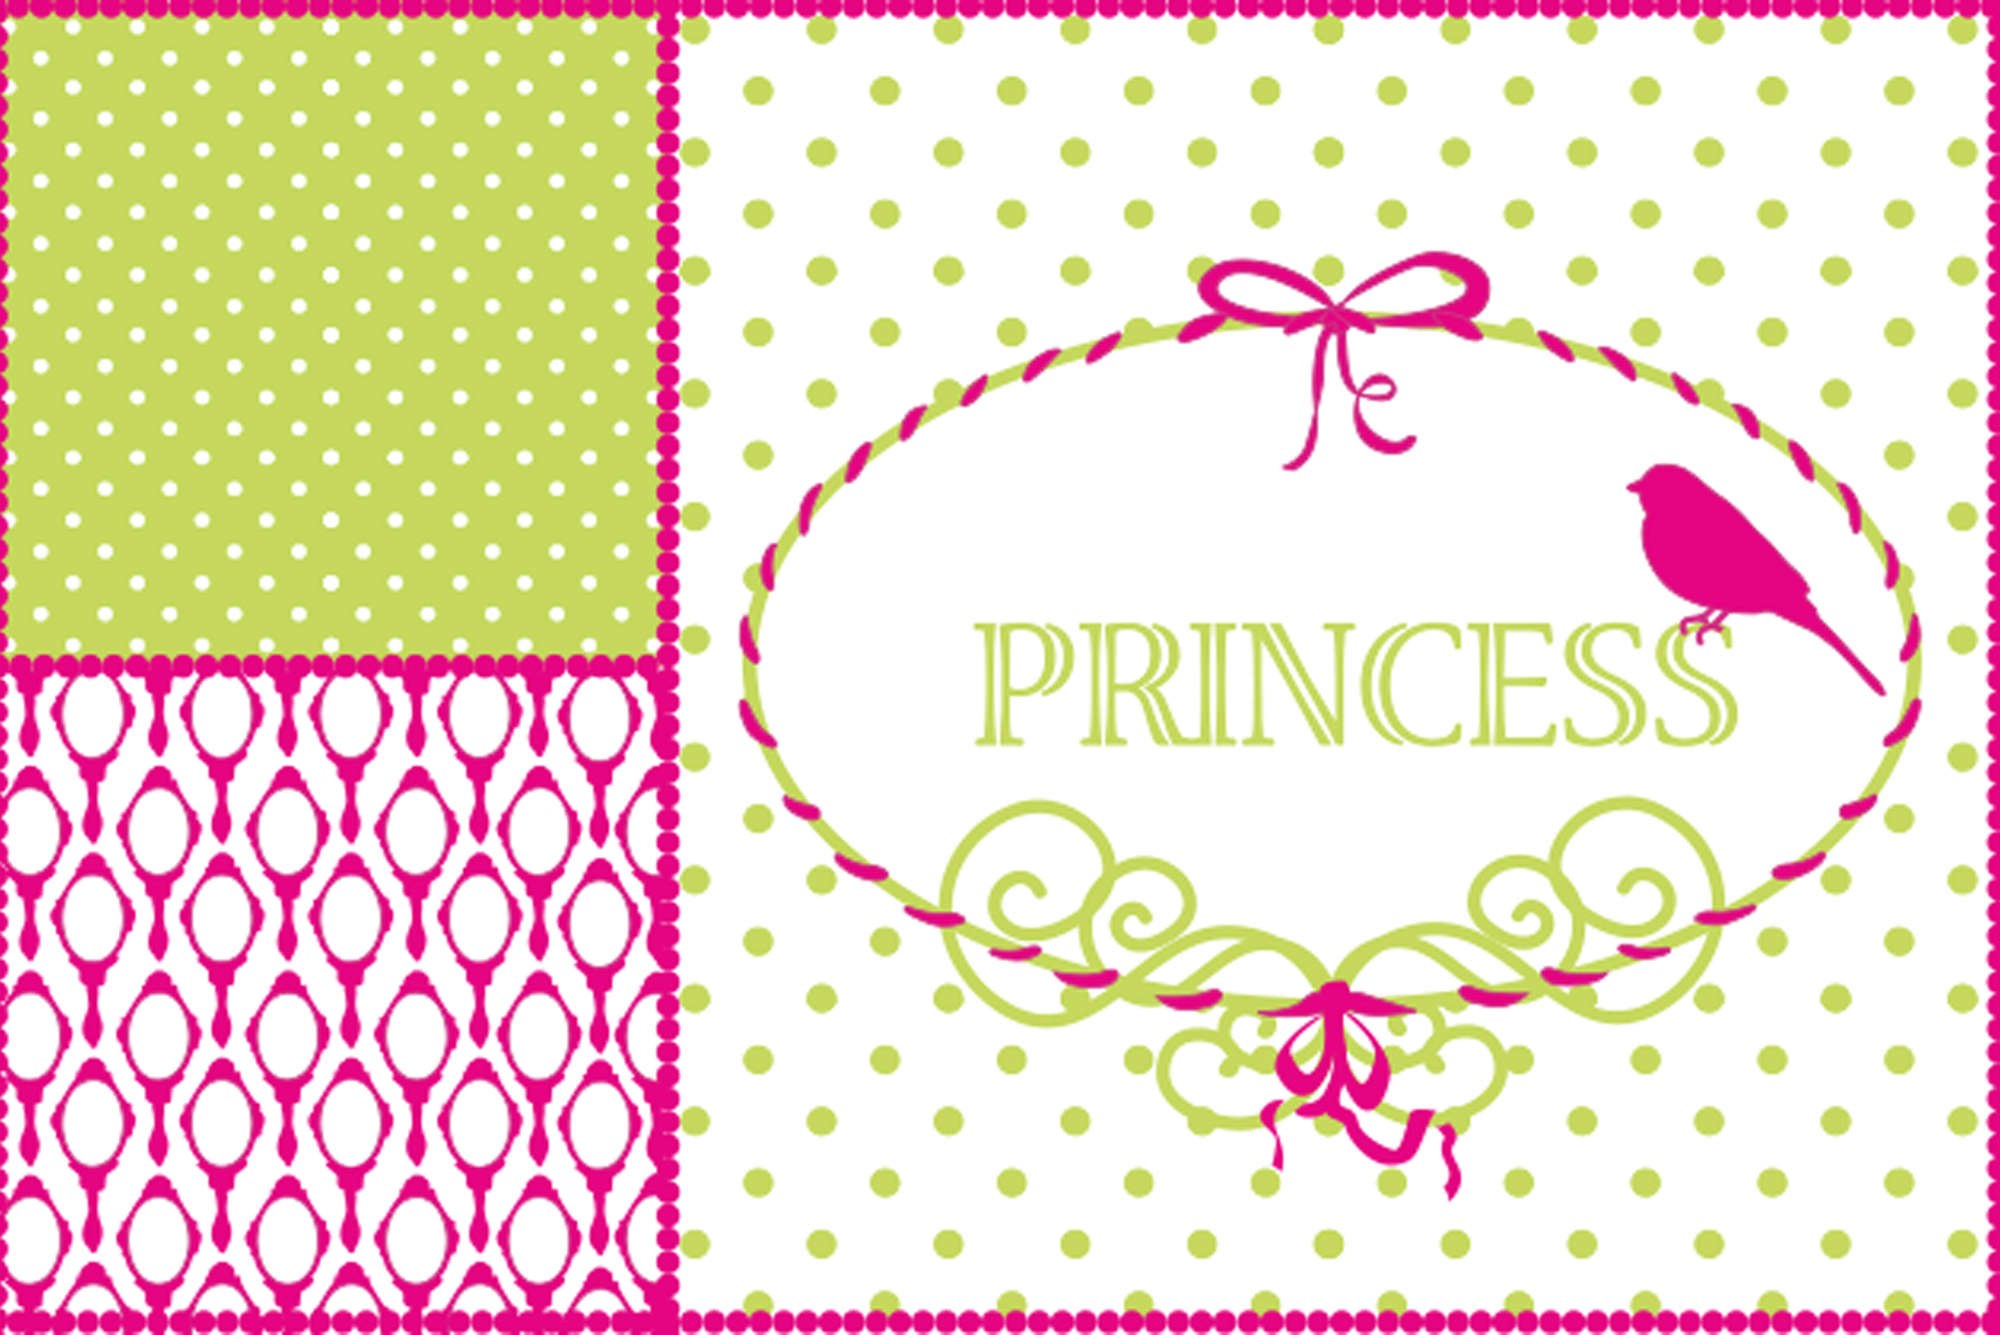             Fototapete im Kinderdesign mit Schriftzug "Princess" – Premium Glattvlies
        